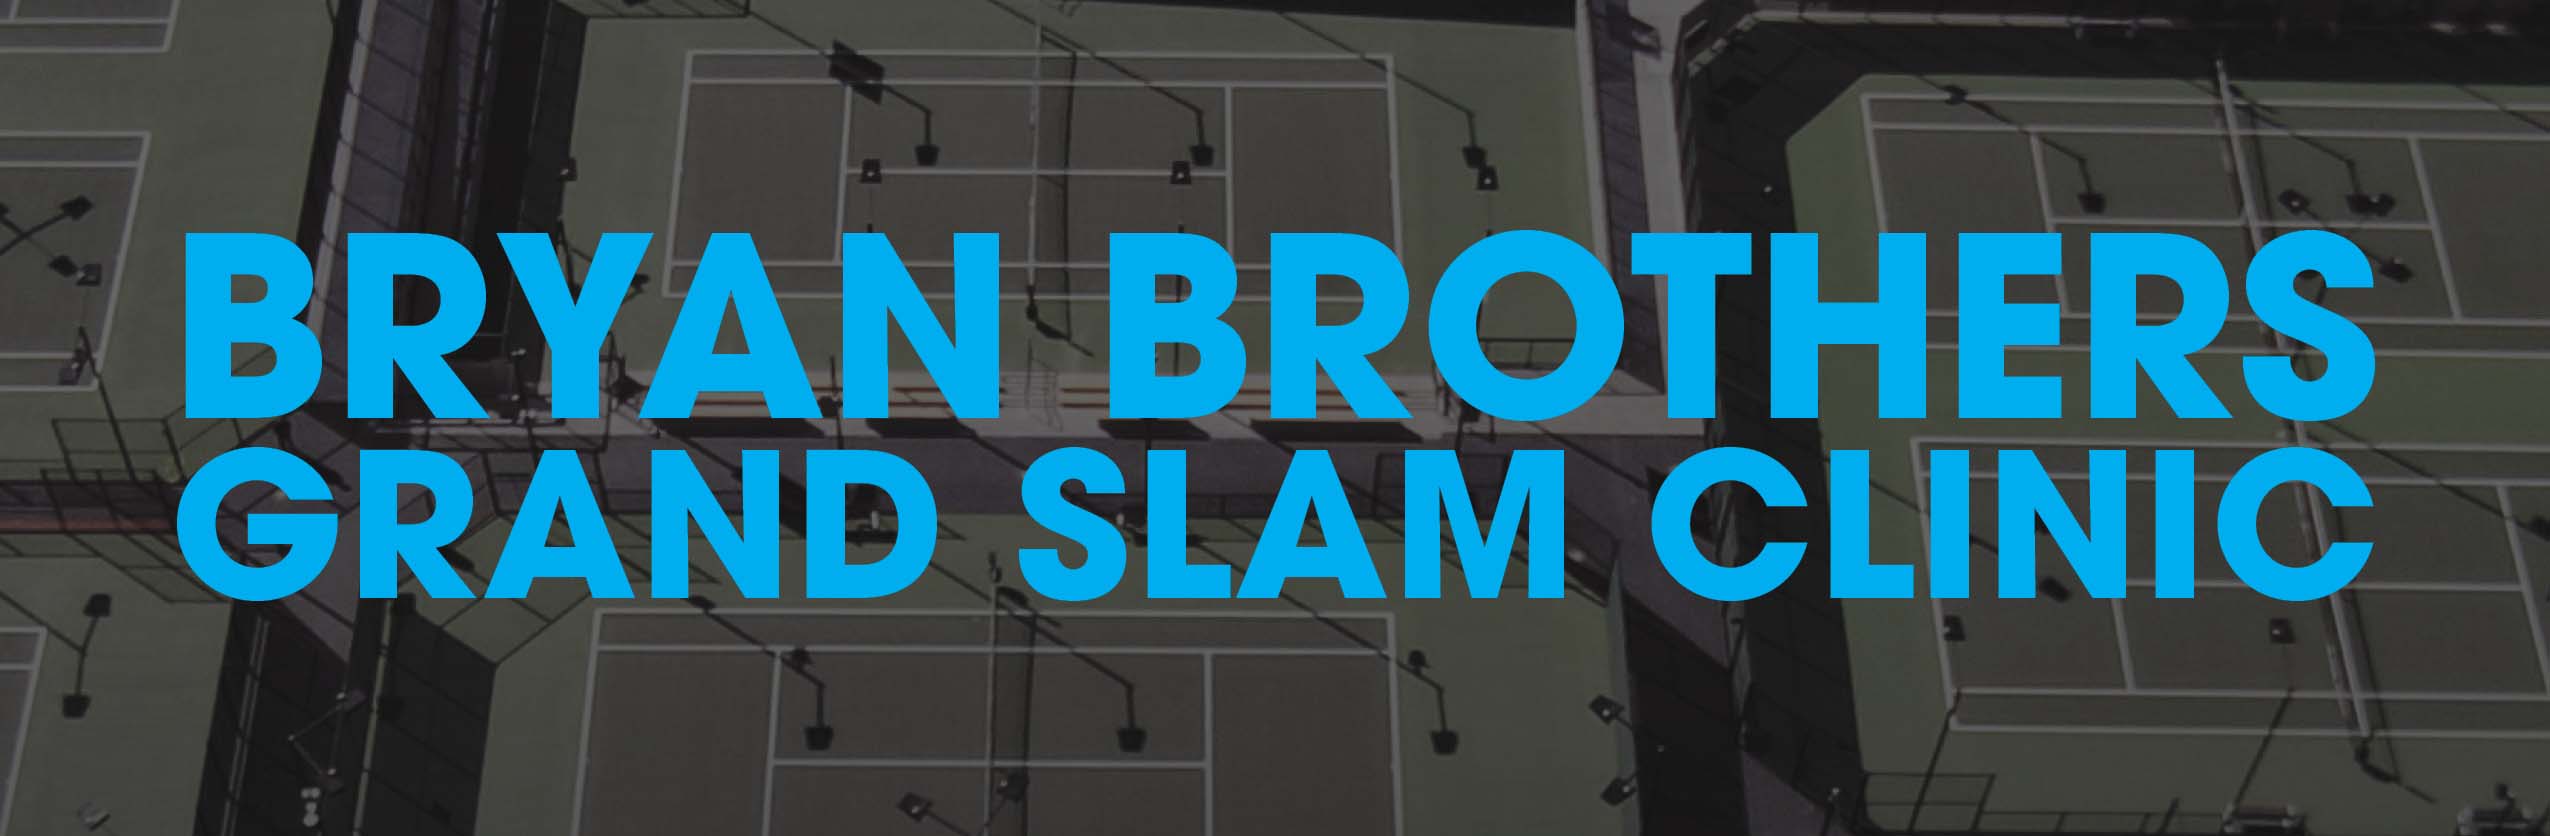 Bryan Brothers Grand Slam Clinic